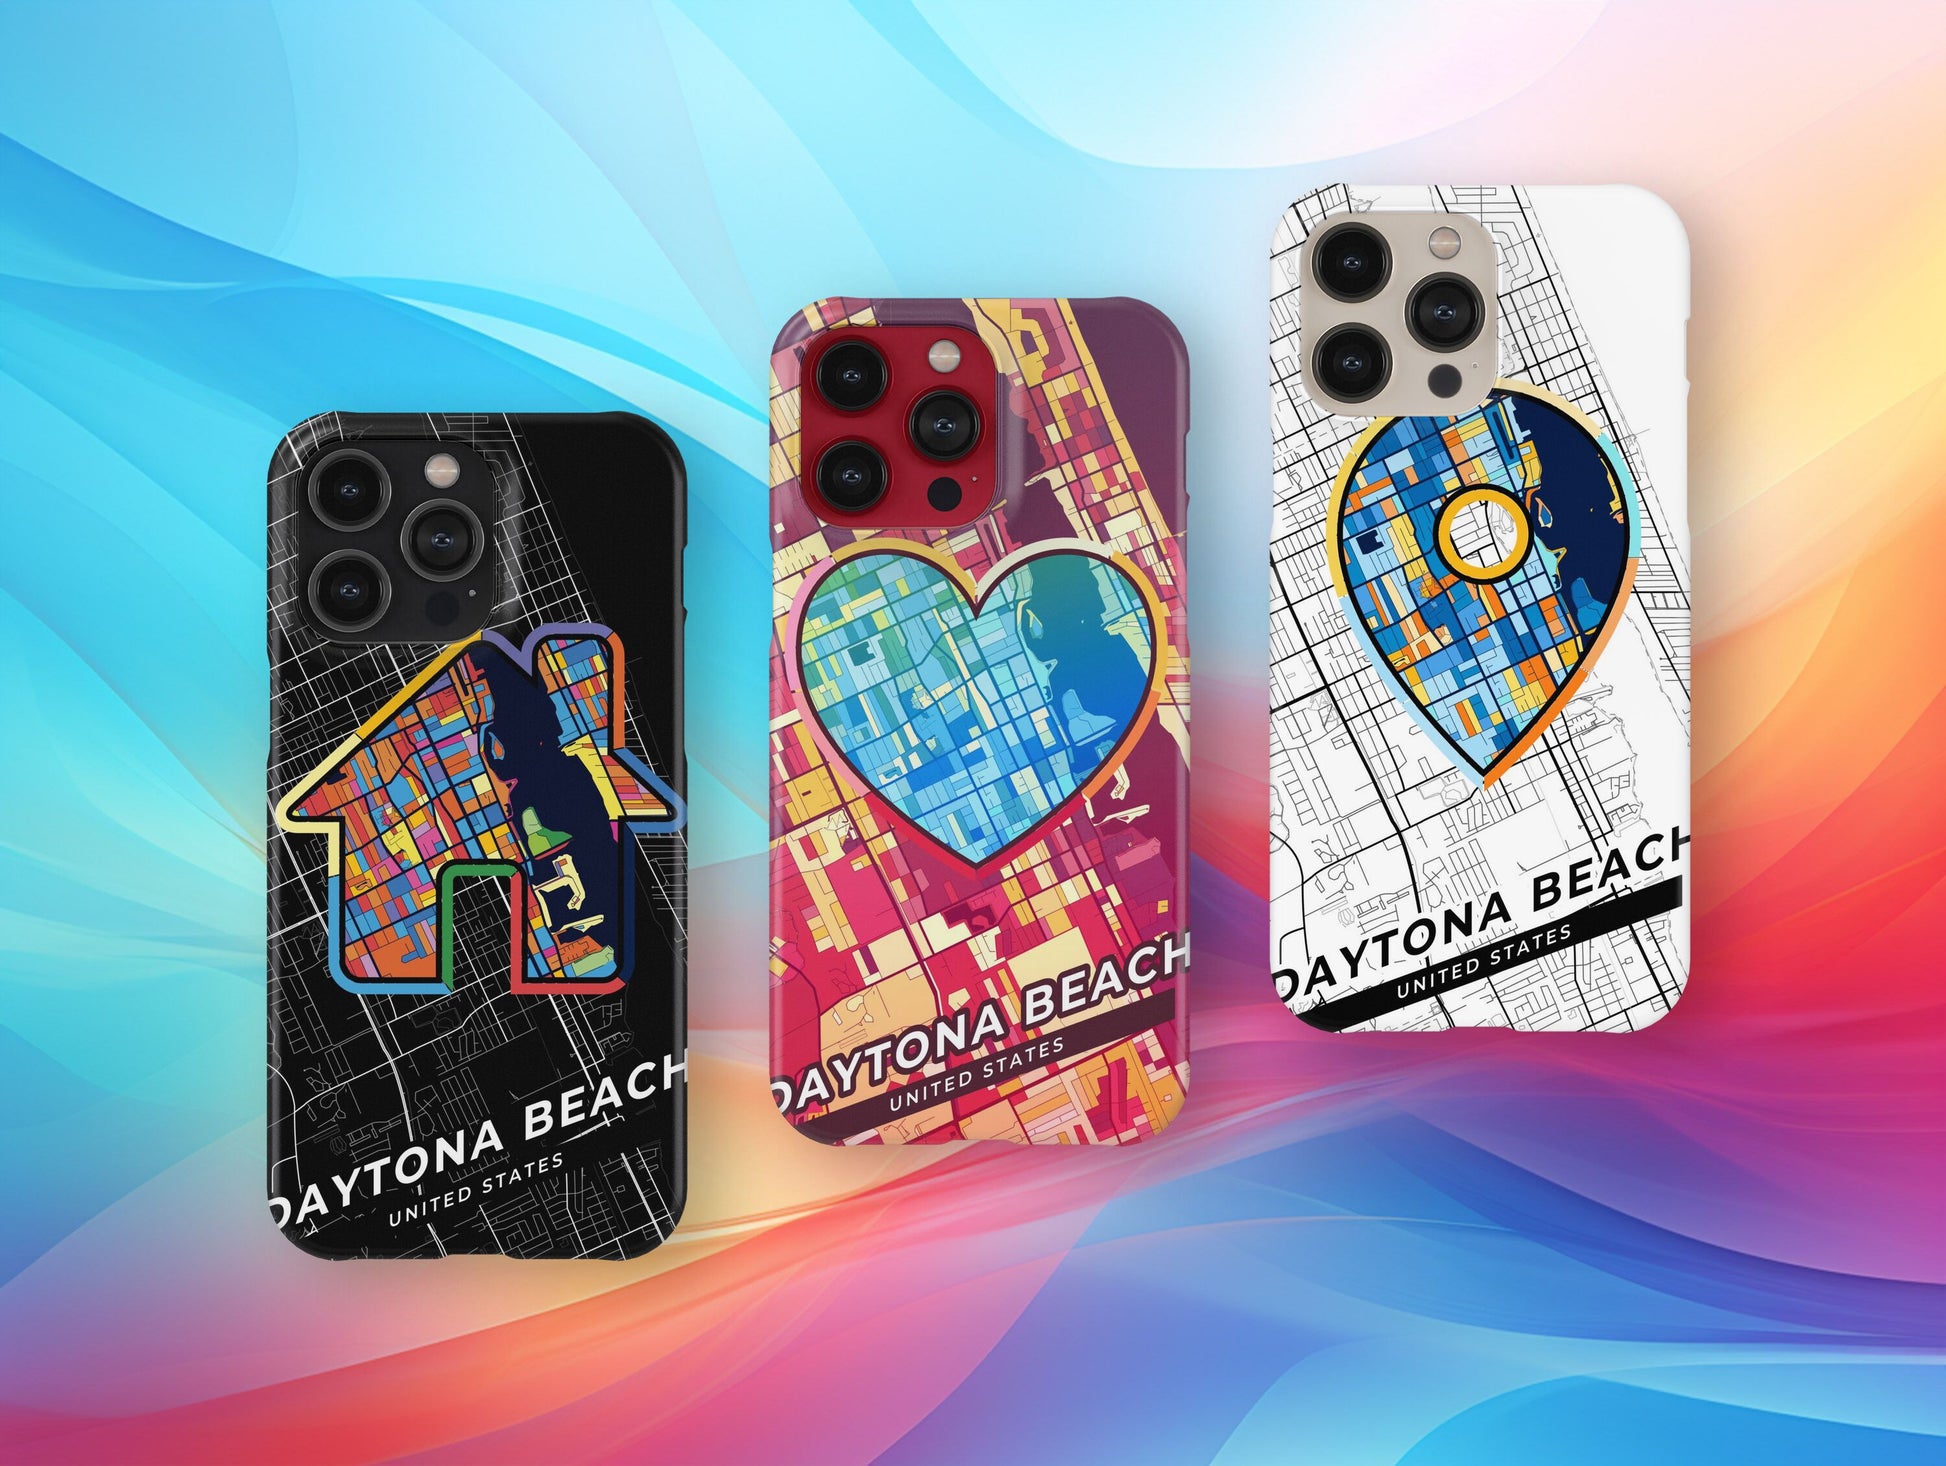 Daytona Beach Florida slim phone case with colorful icon. Birthday, wedding or housewarming gift. Couple match cases.